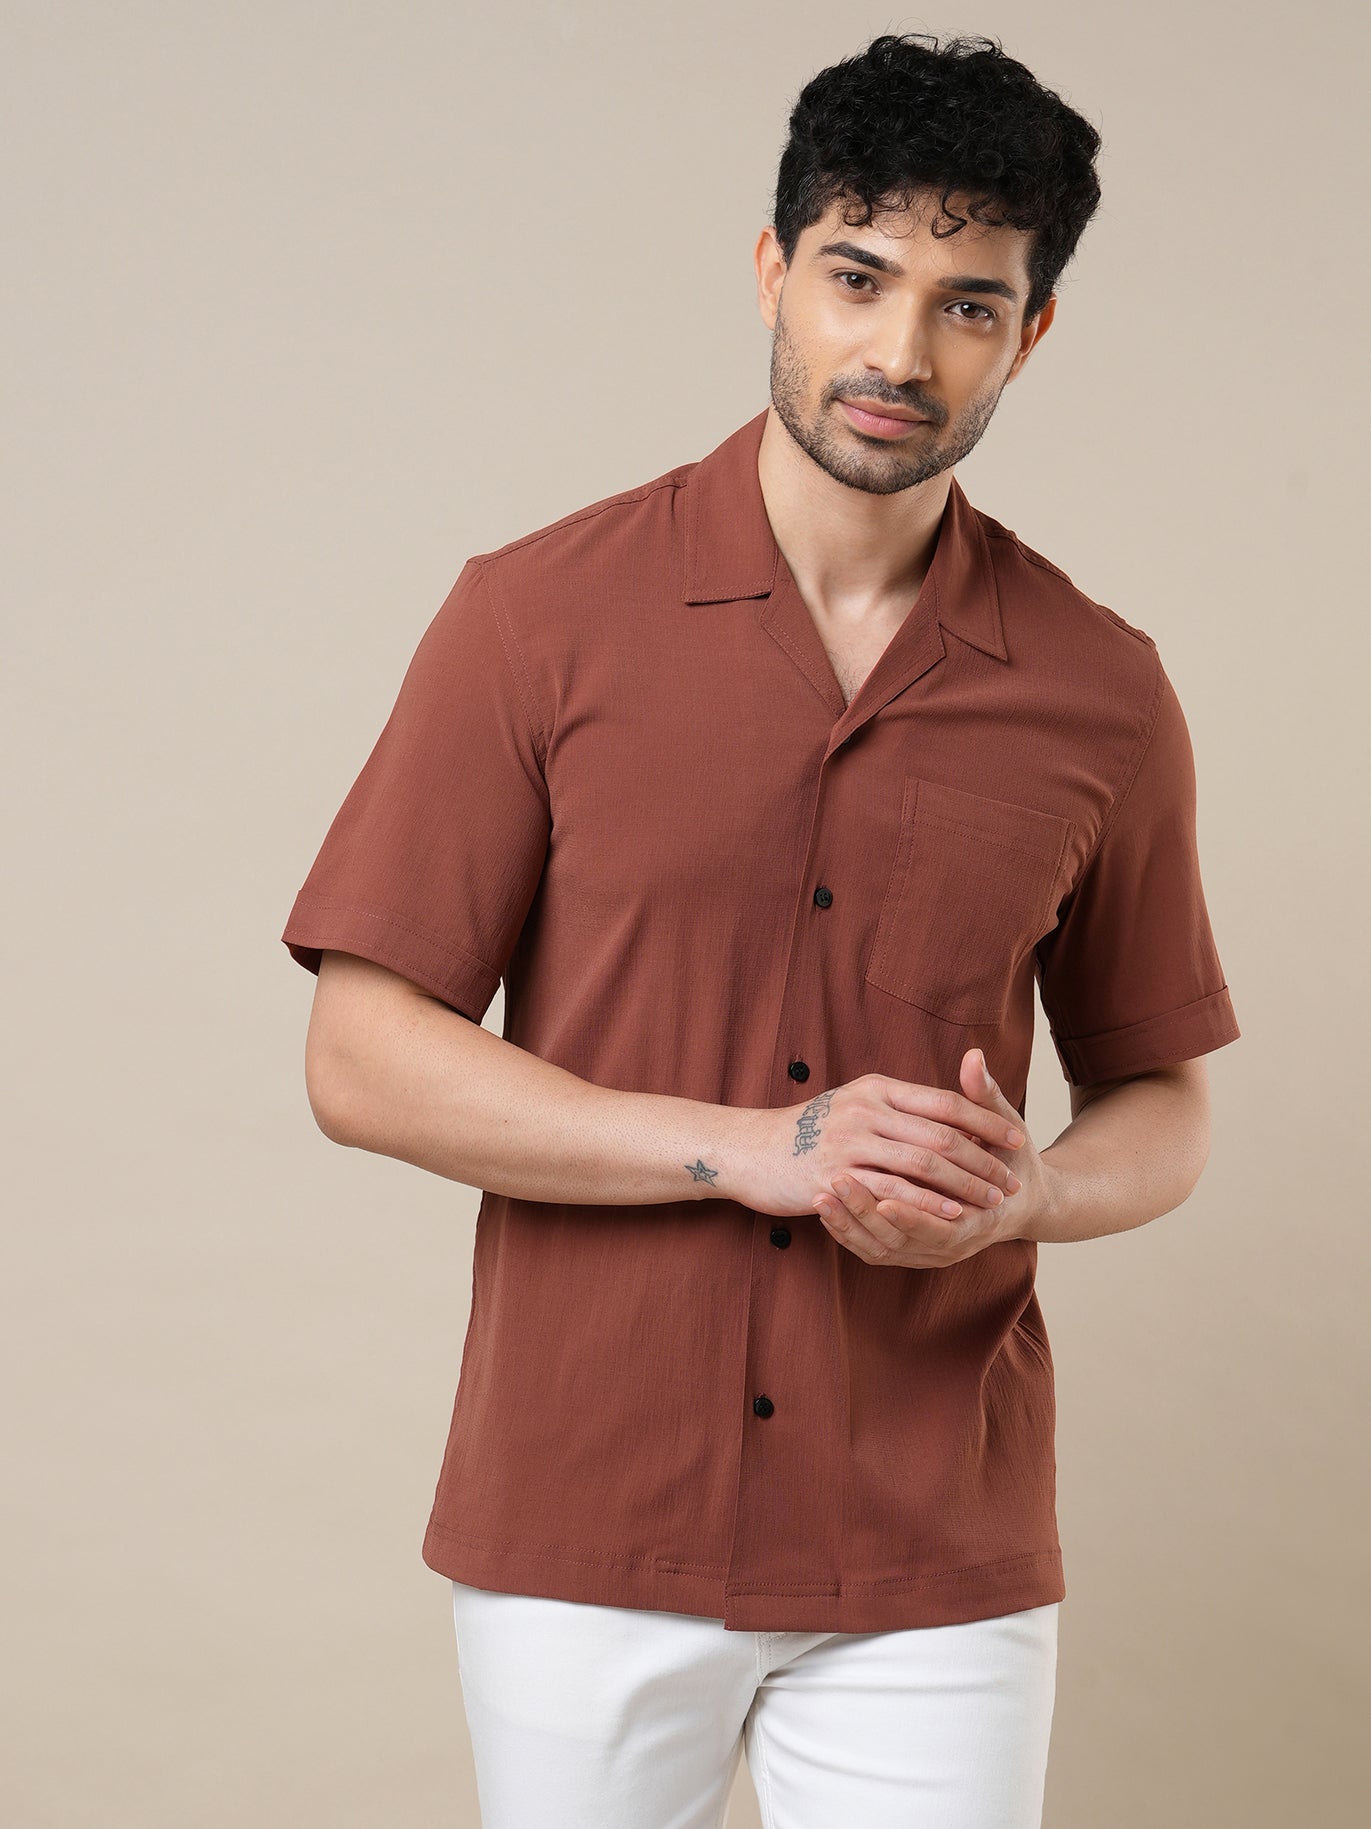 Cuban Collared - Shirts & Tops